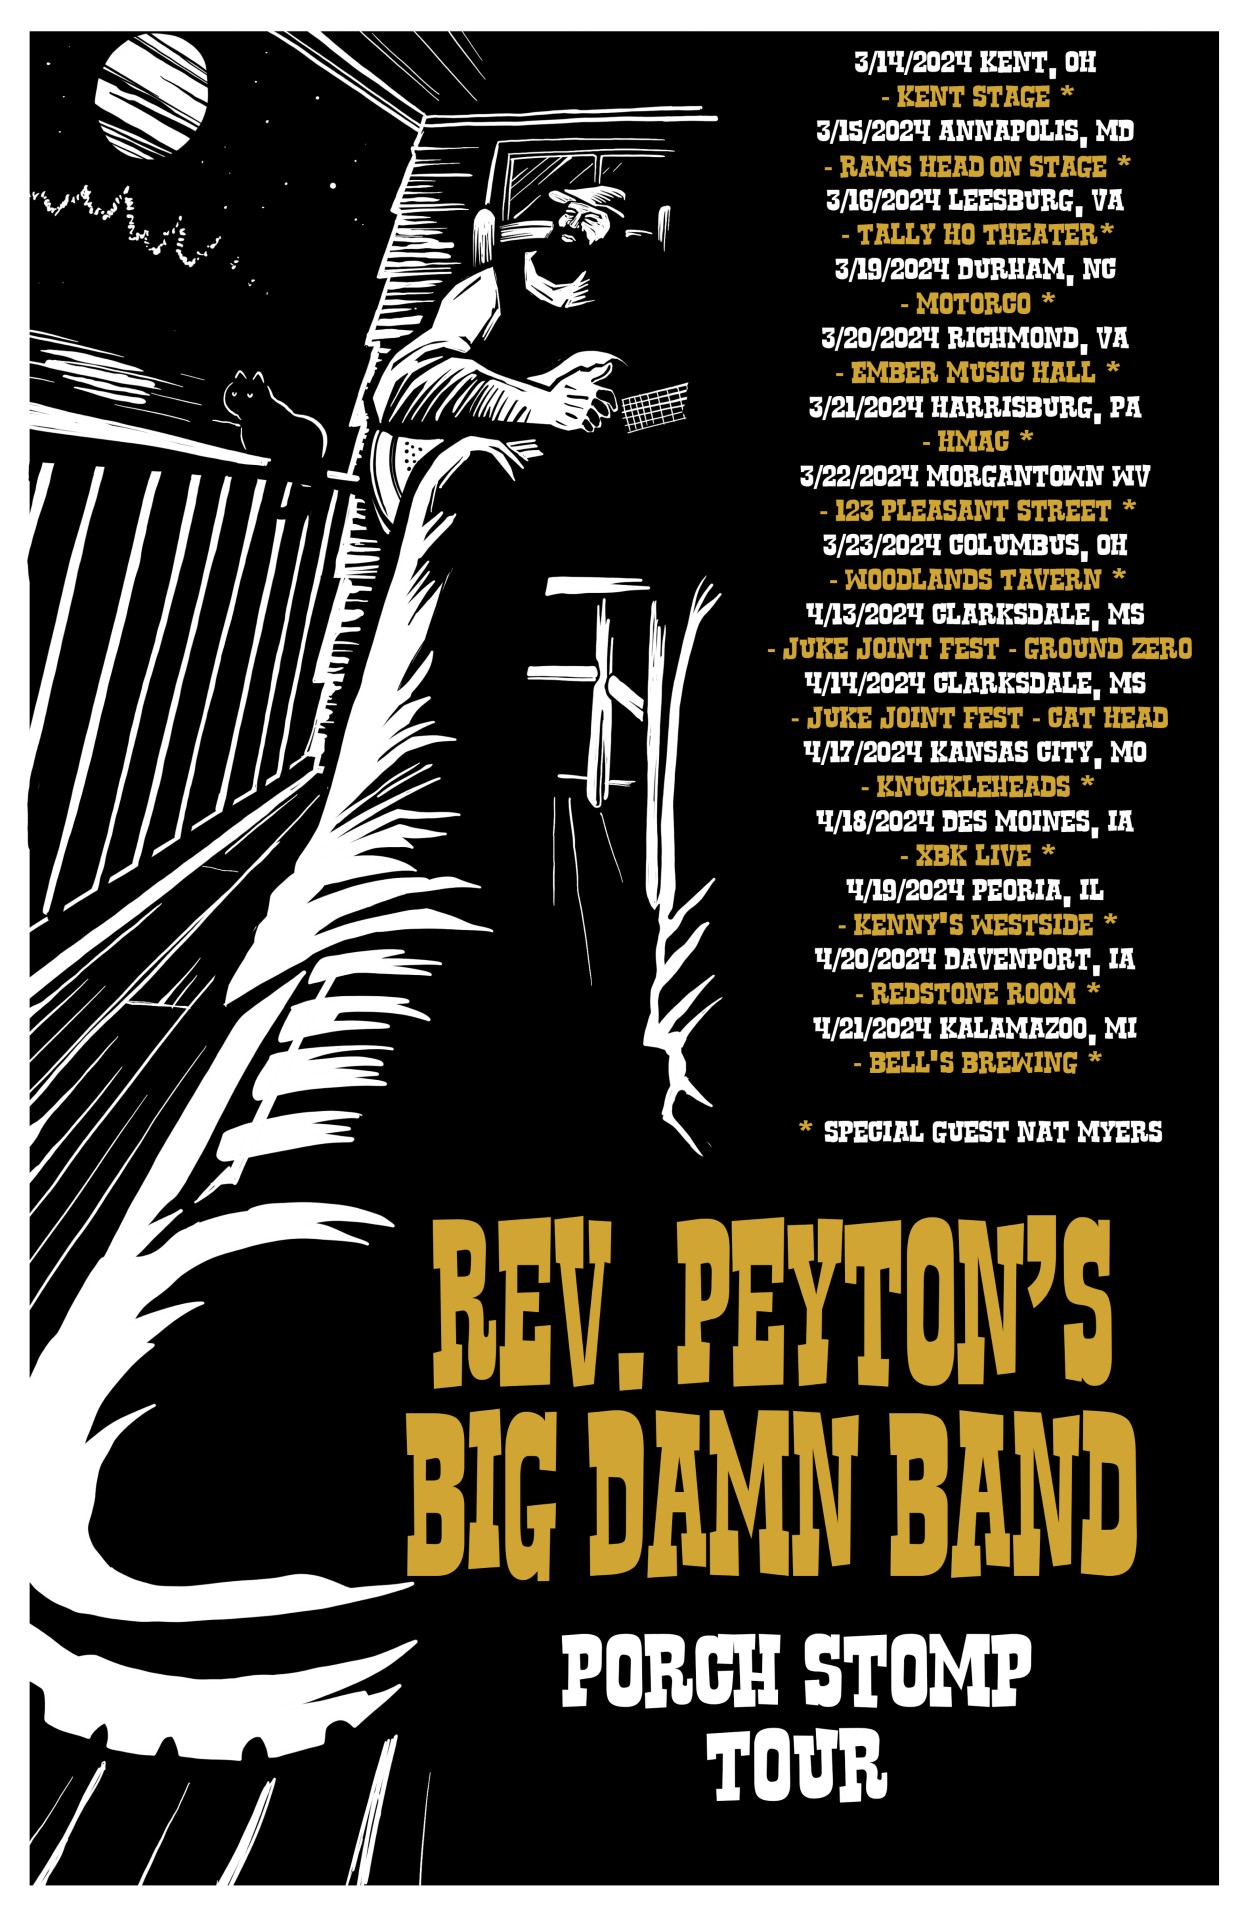 Reverend Peyton's Big Damn Band “Porch Stomp Tour” flyer